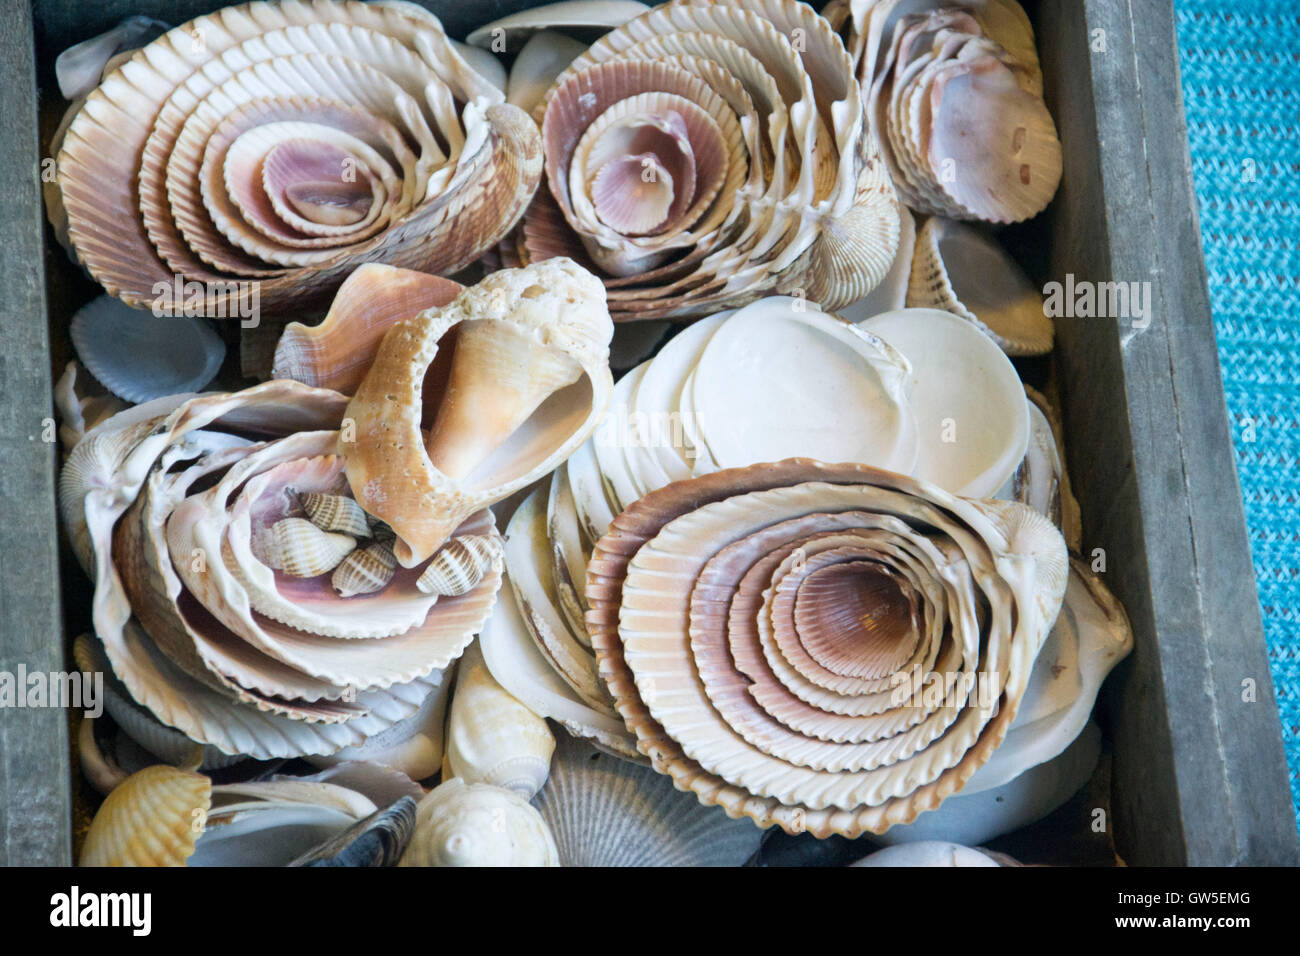 some seashells Stock Photo